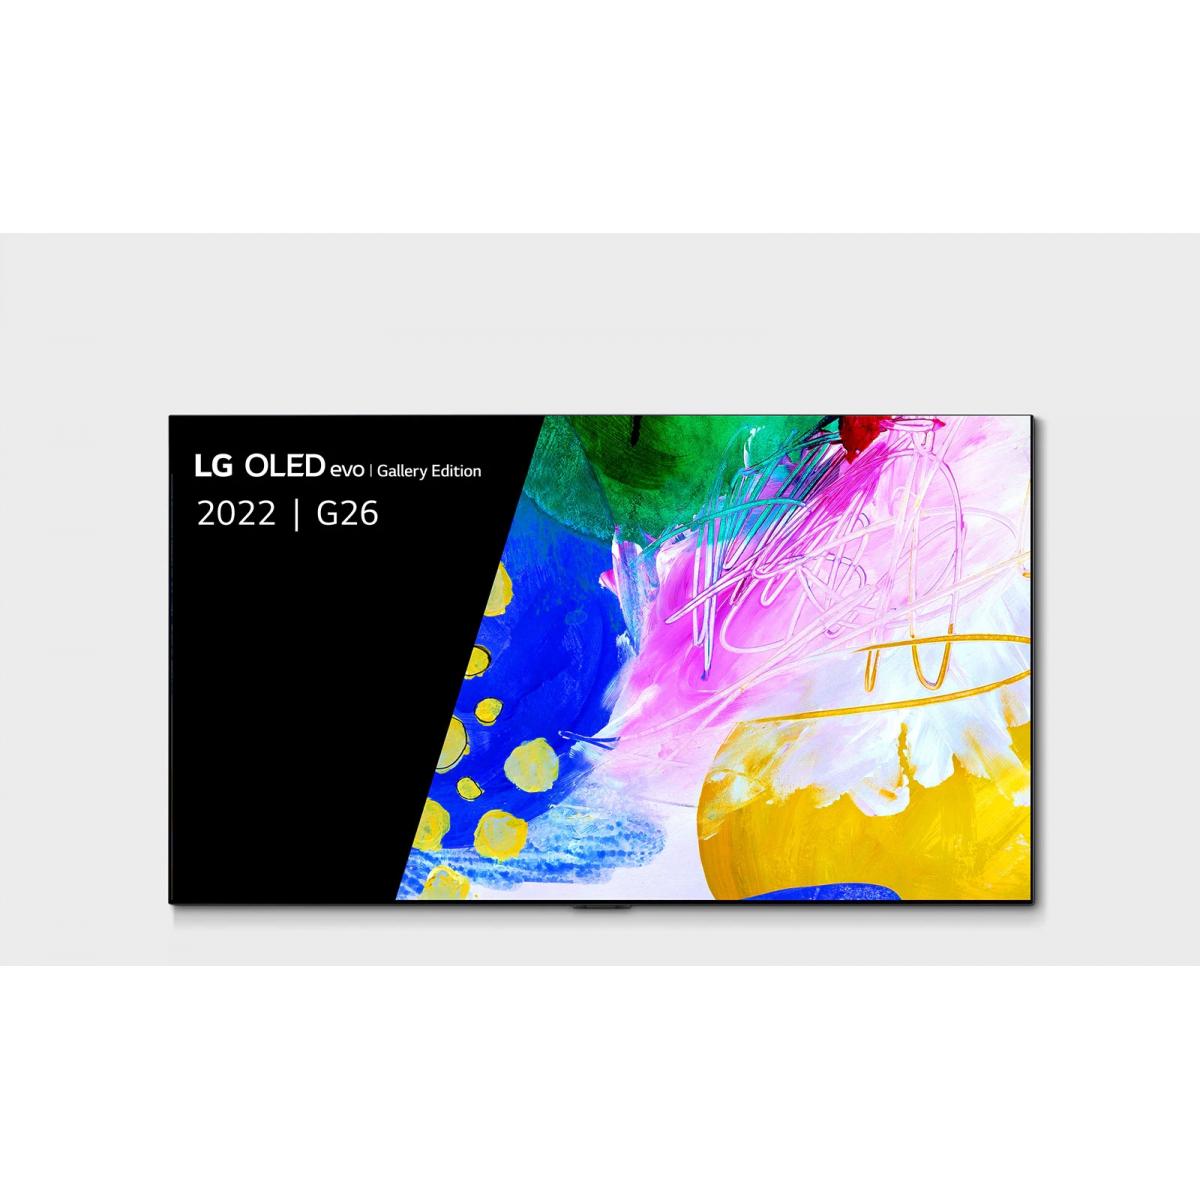 LG TV OLED 55" 139 cm - OLED55G2 - Gallery Edition - 2022